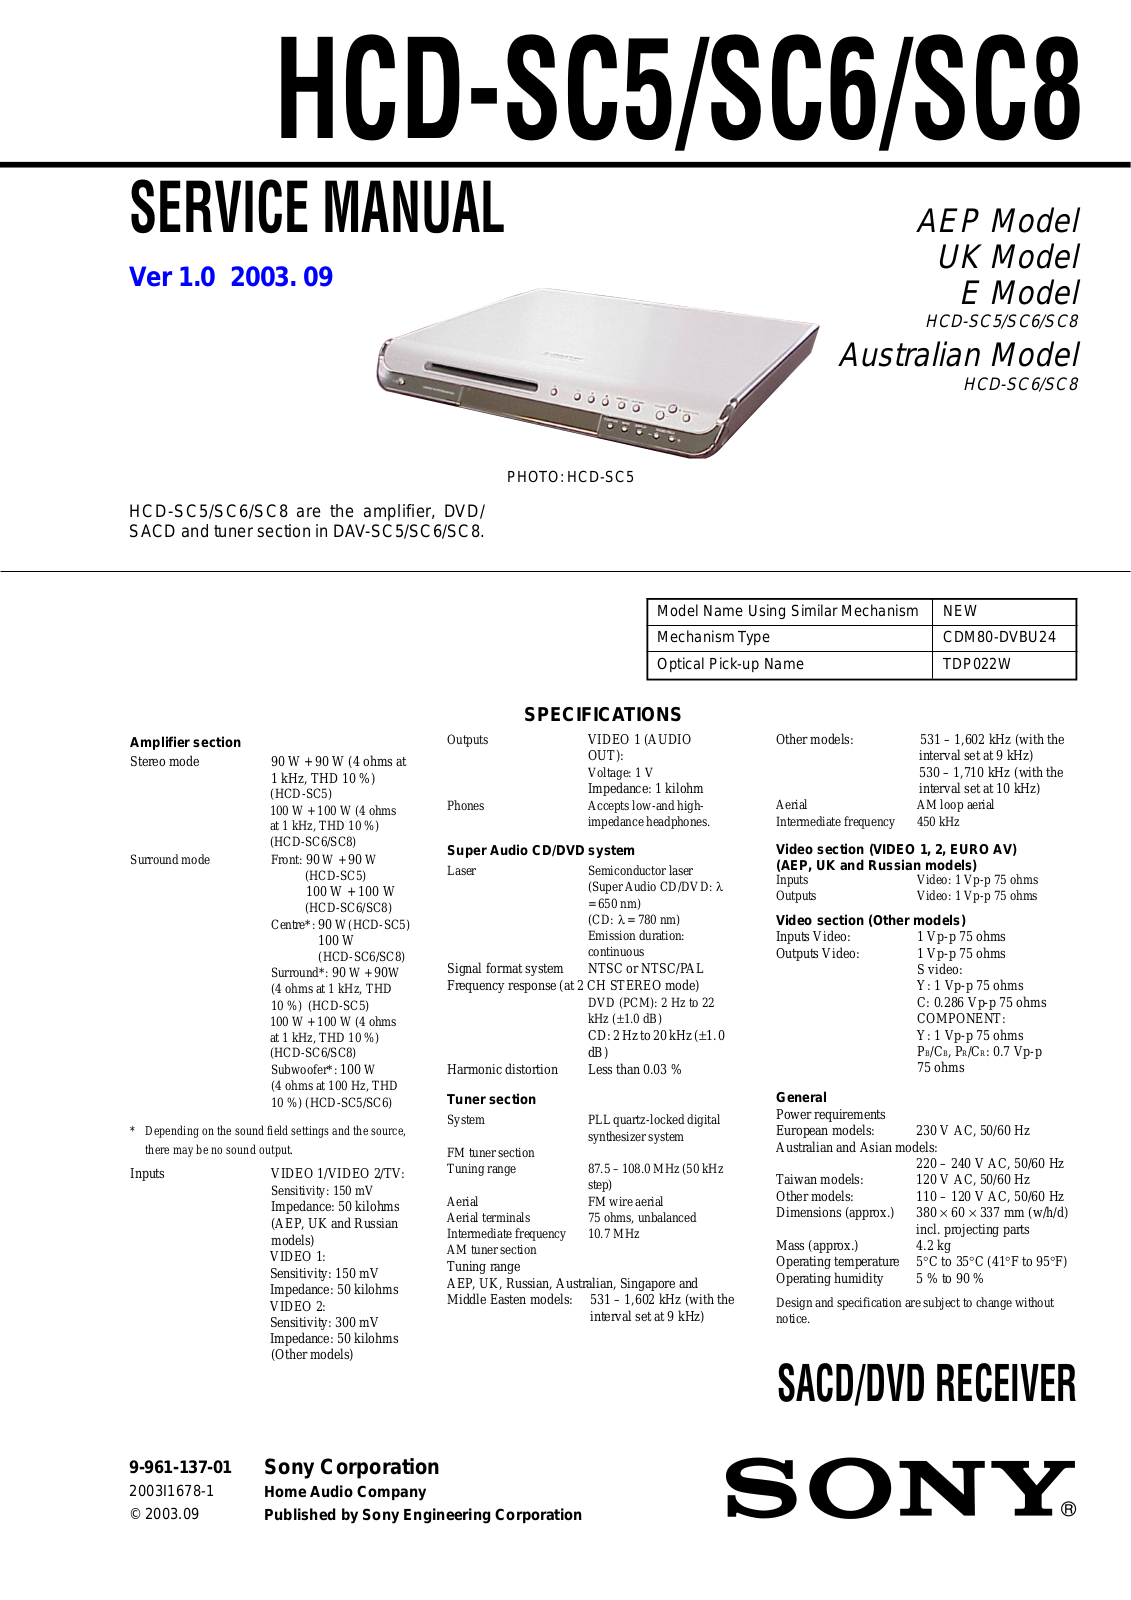 Sony HCDSC-5, HCDSC-6, HCDSC-8 Service manual